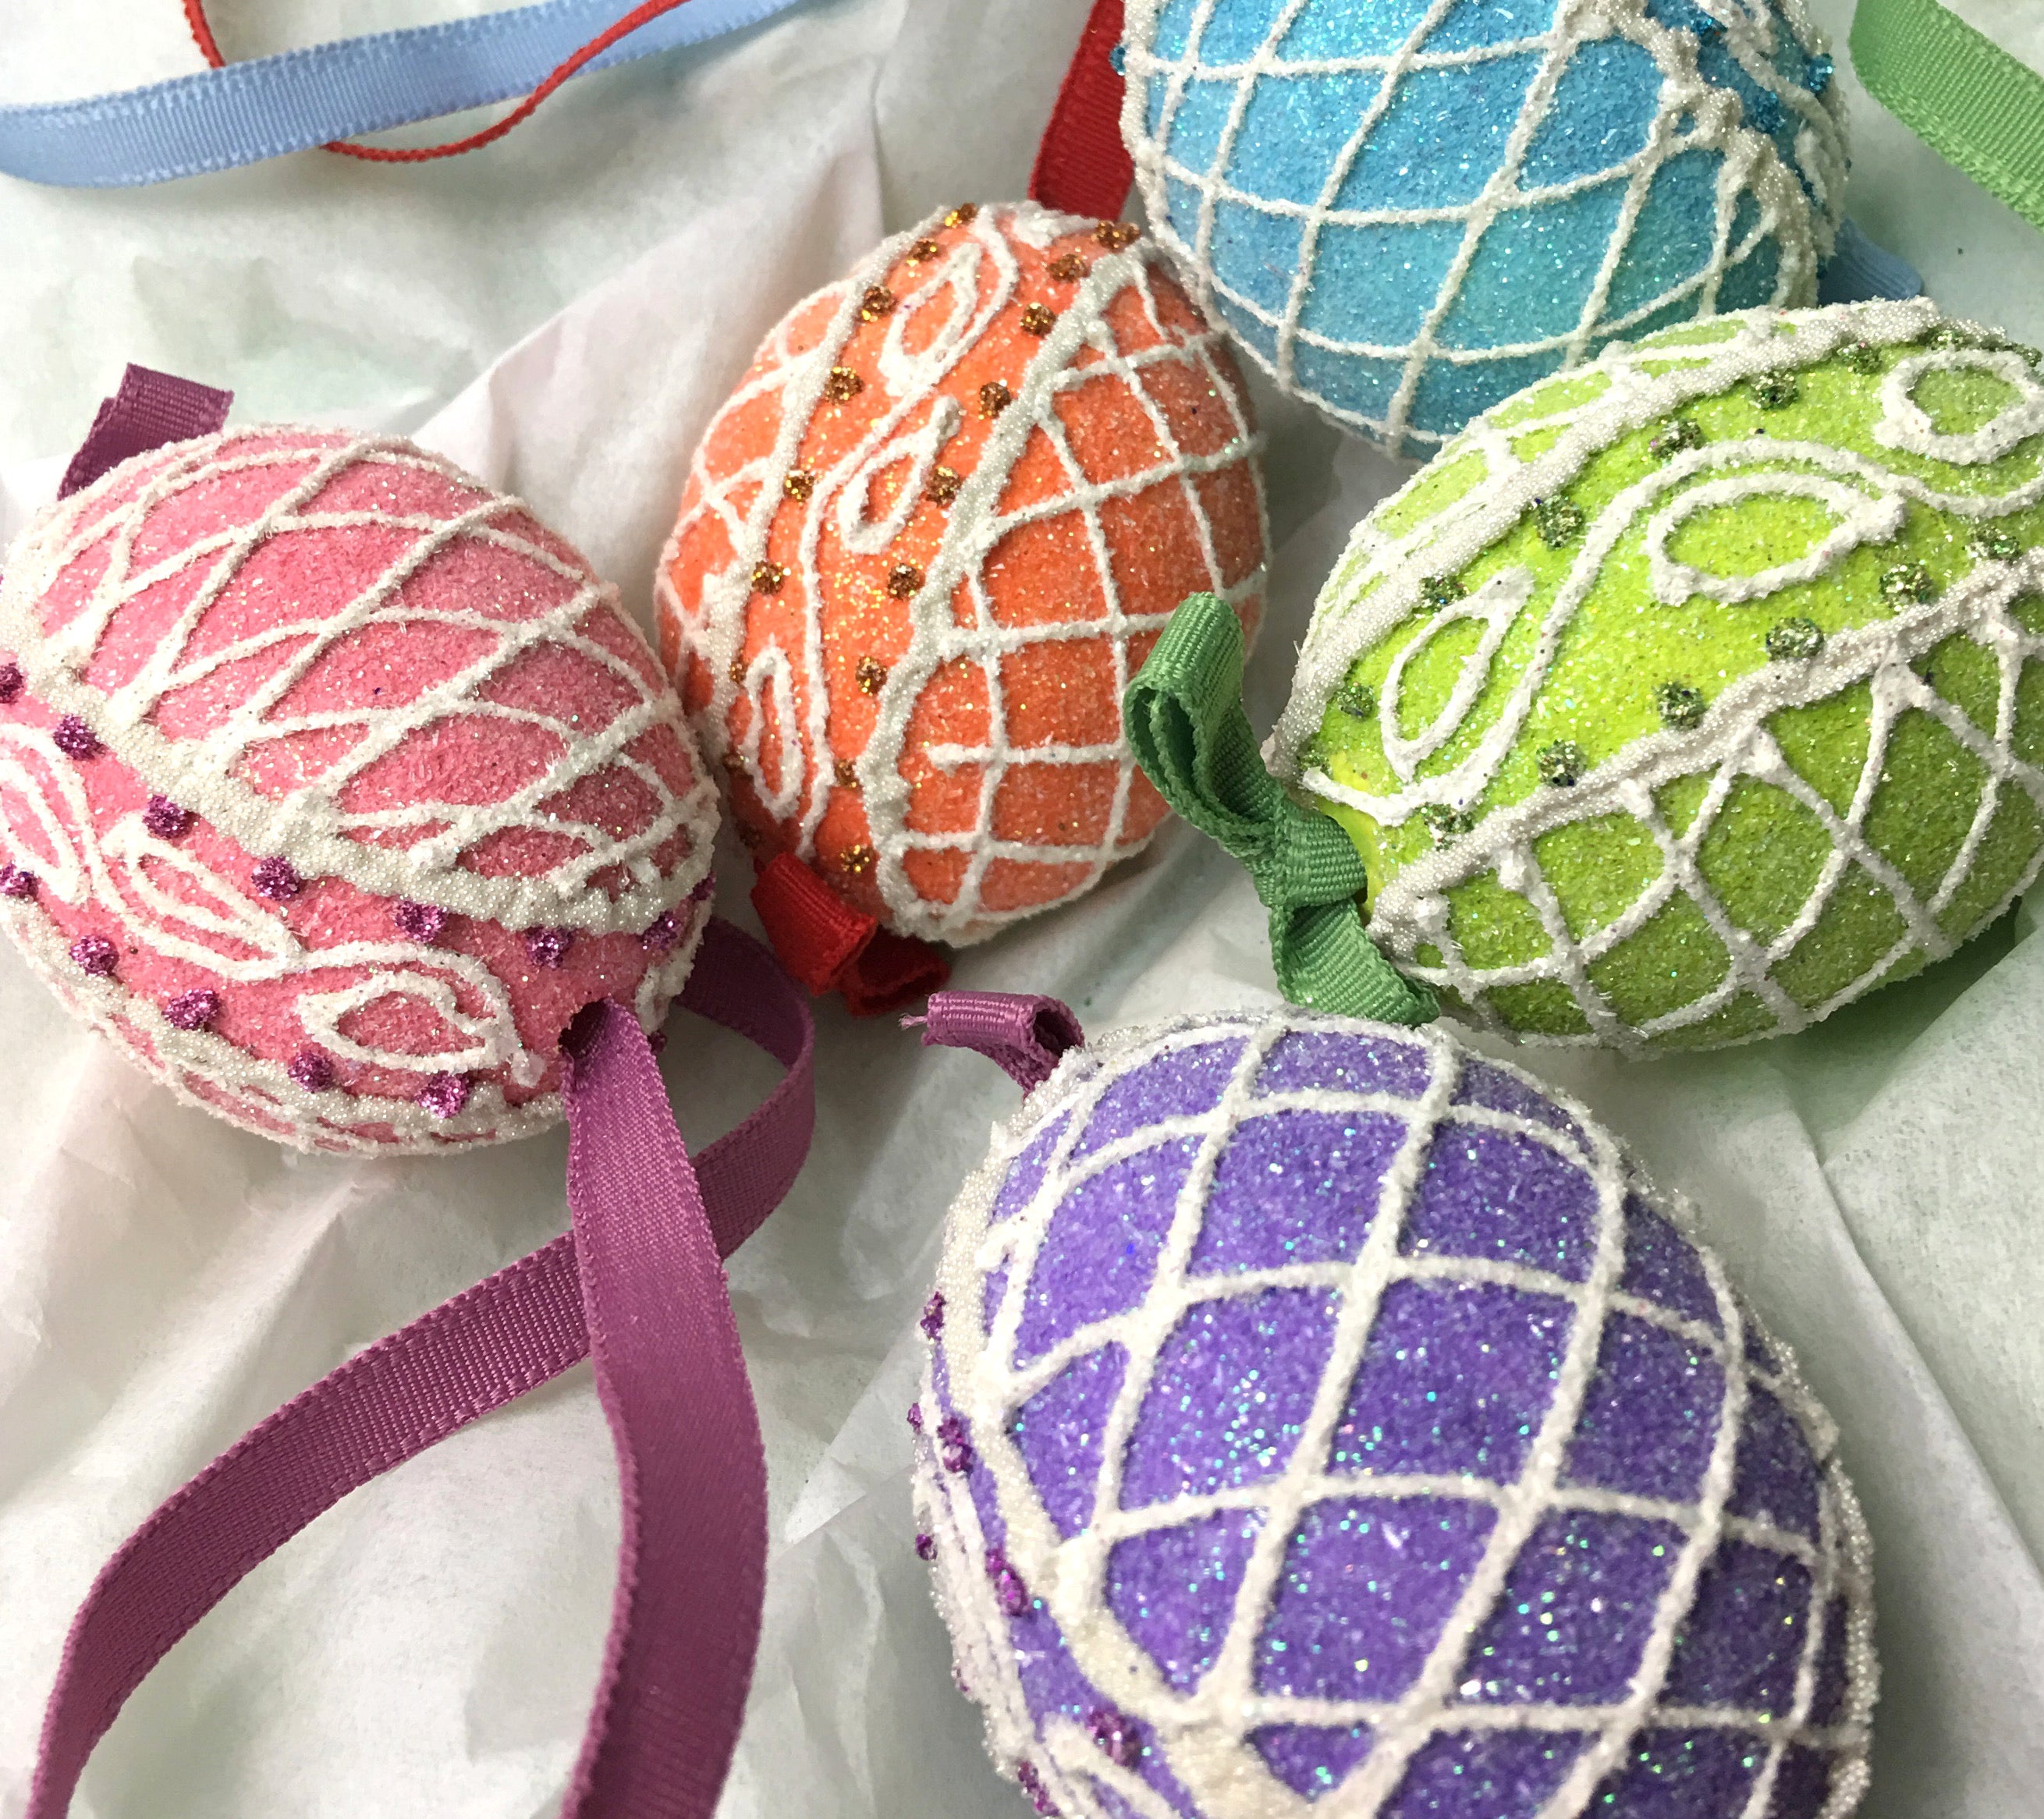 Easter Eggs decorated like Sugar Eggs